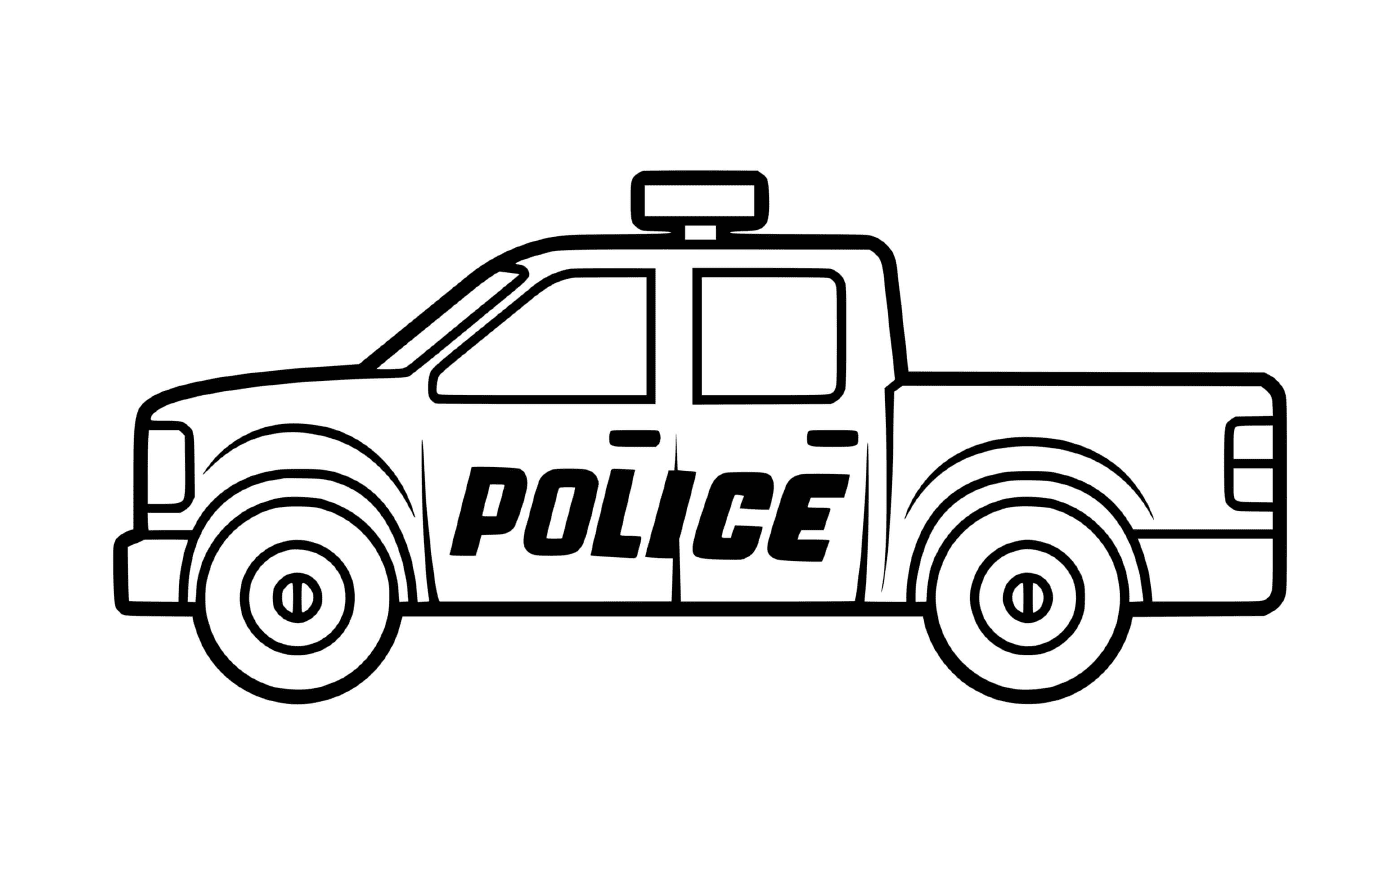  4х4 жандармерия, полицейский автомобиль 